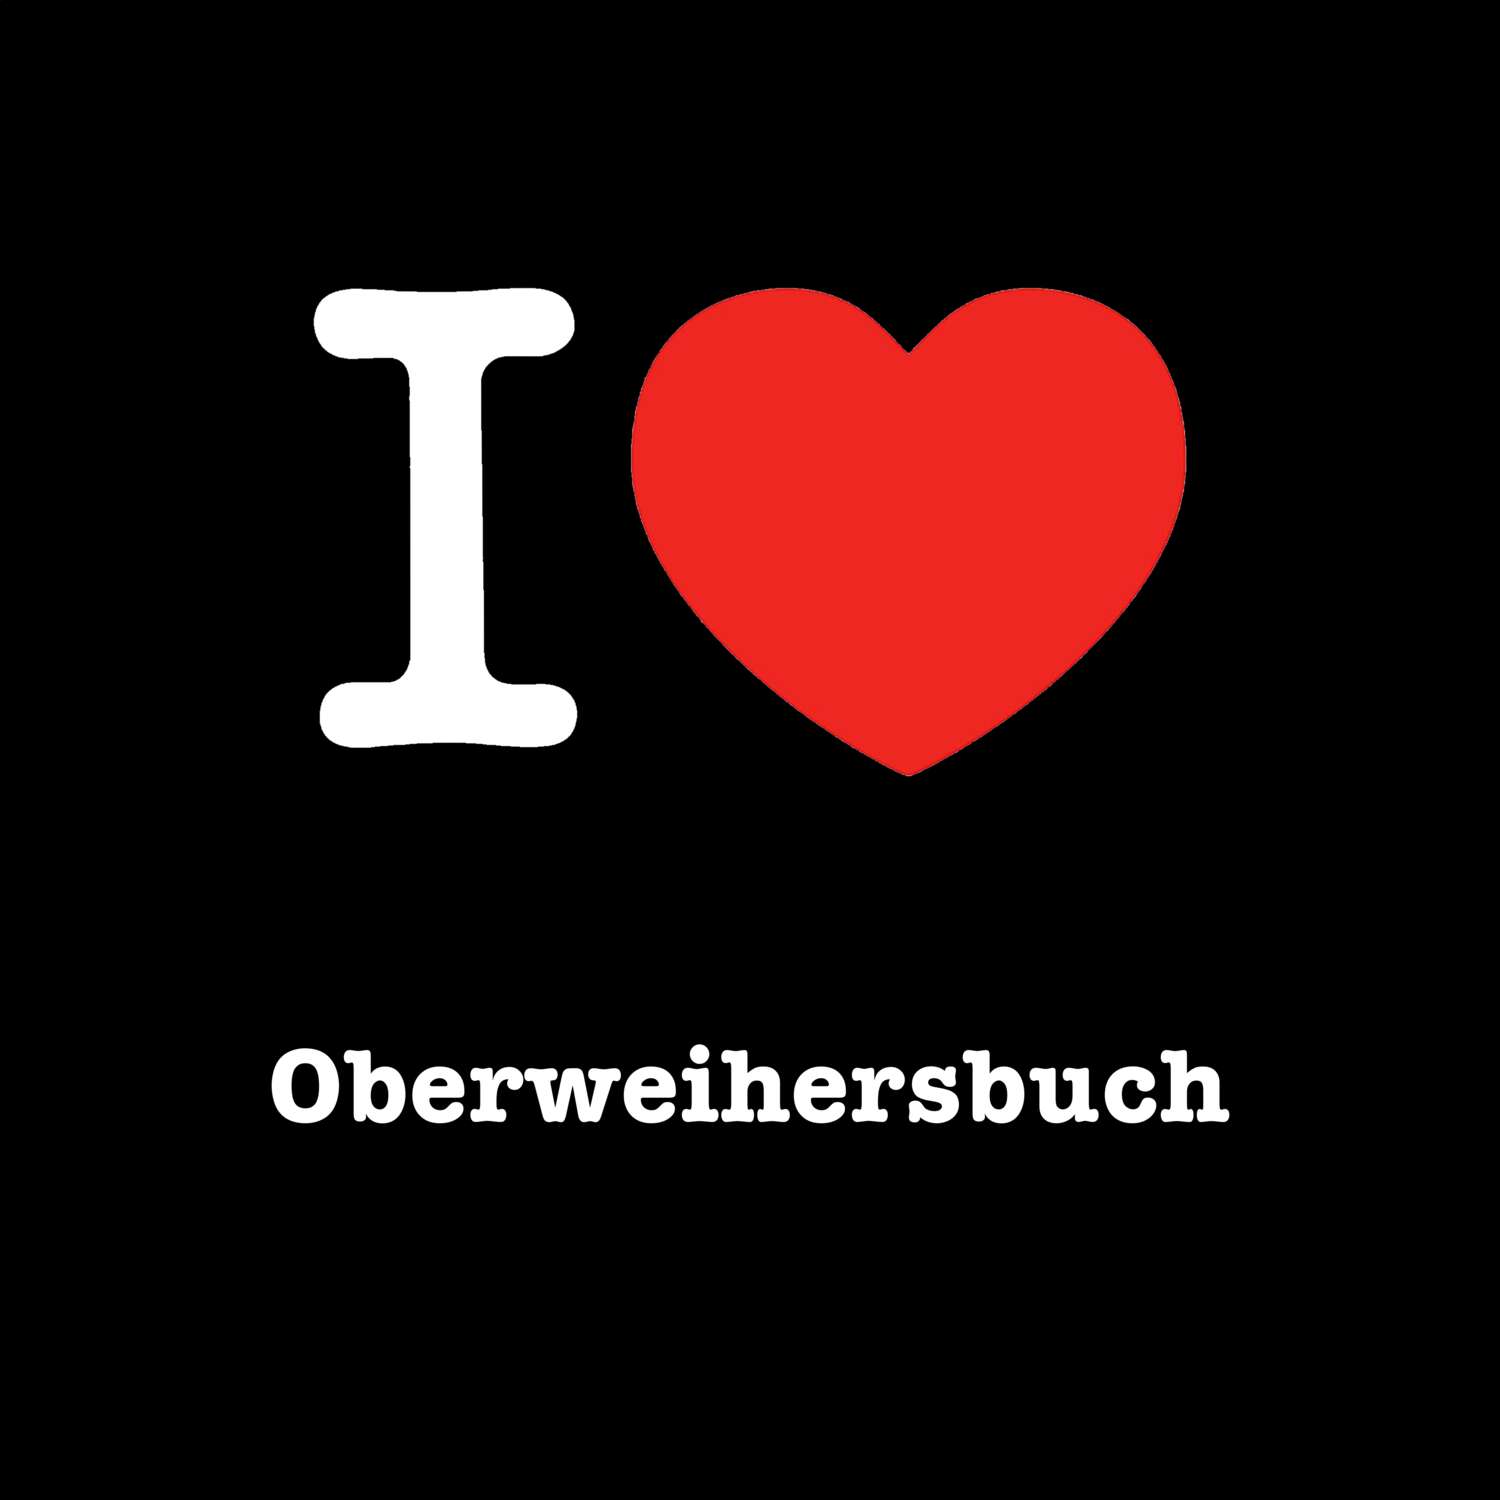 Oberweihersbuch T-Shirt »I love«